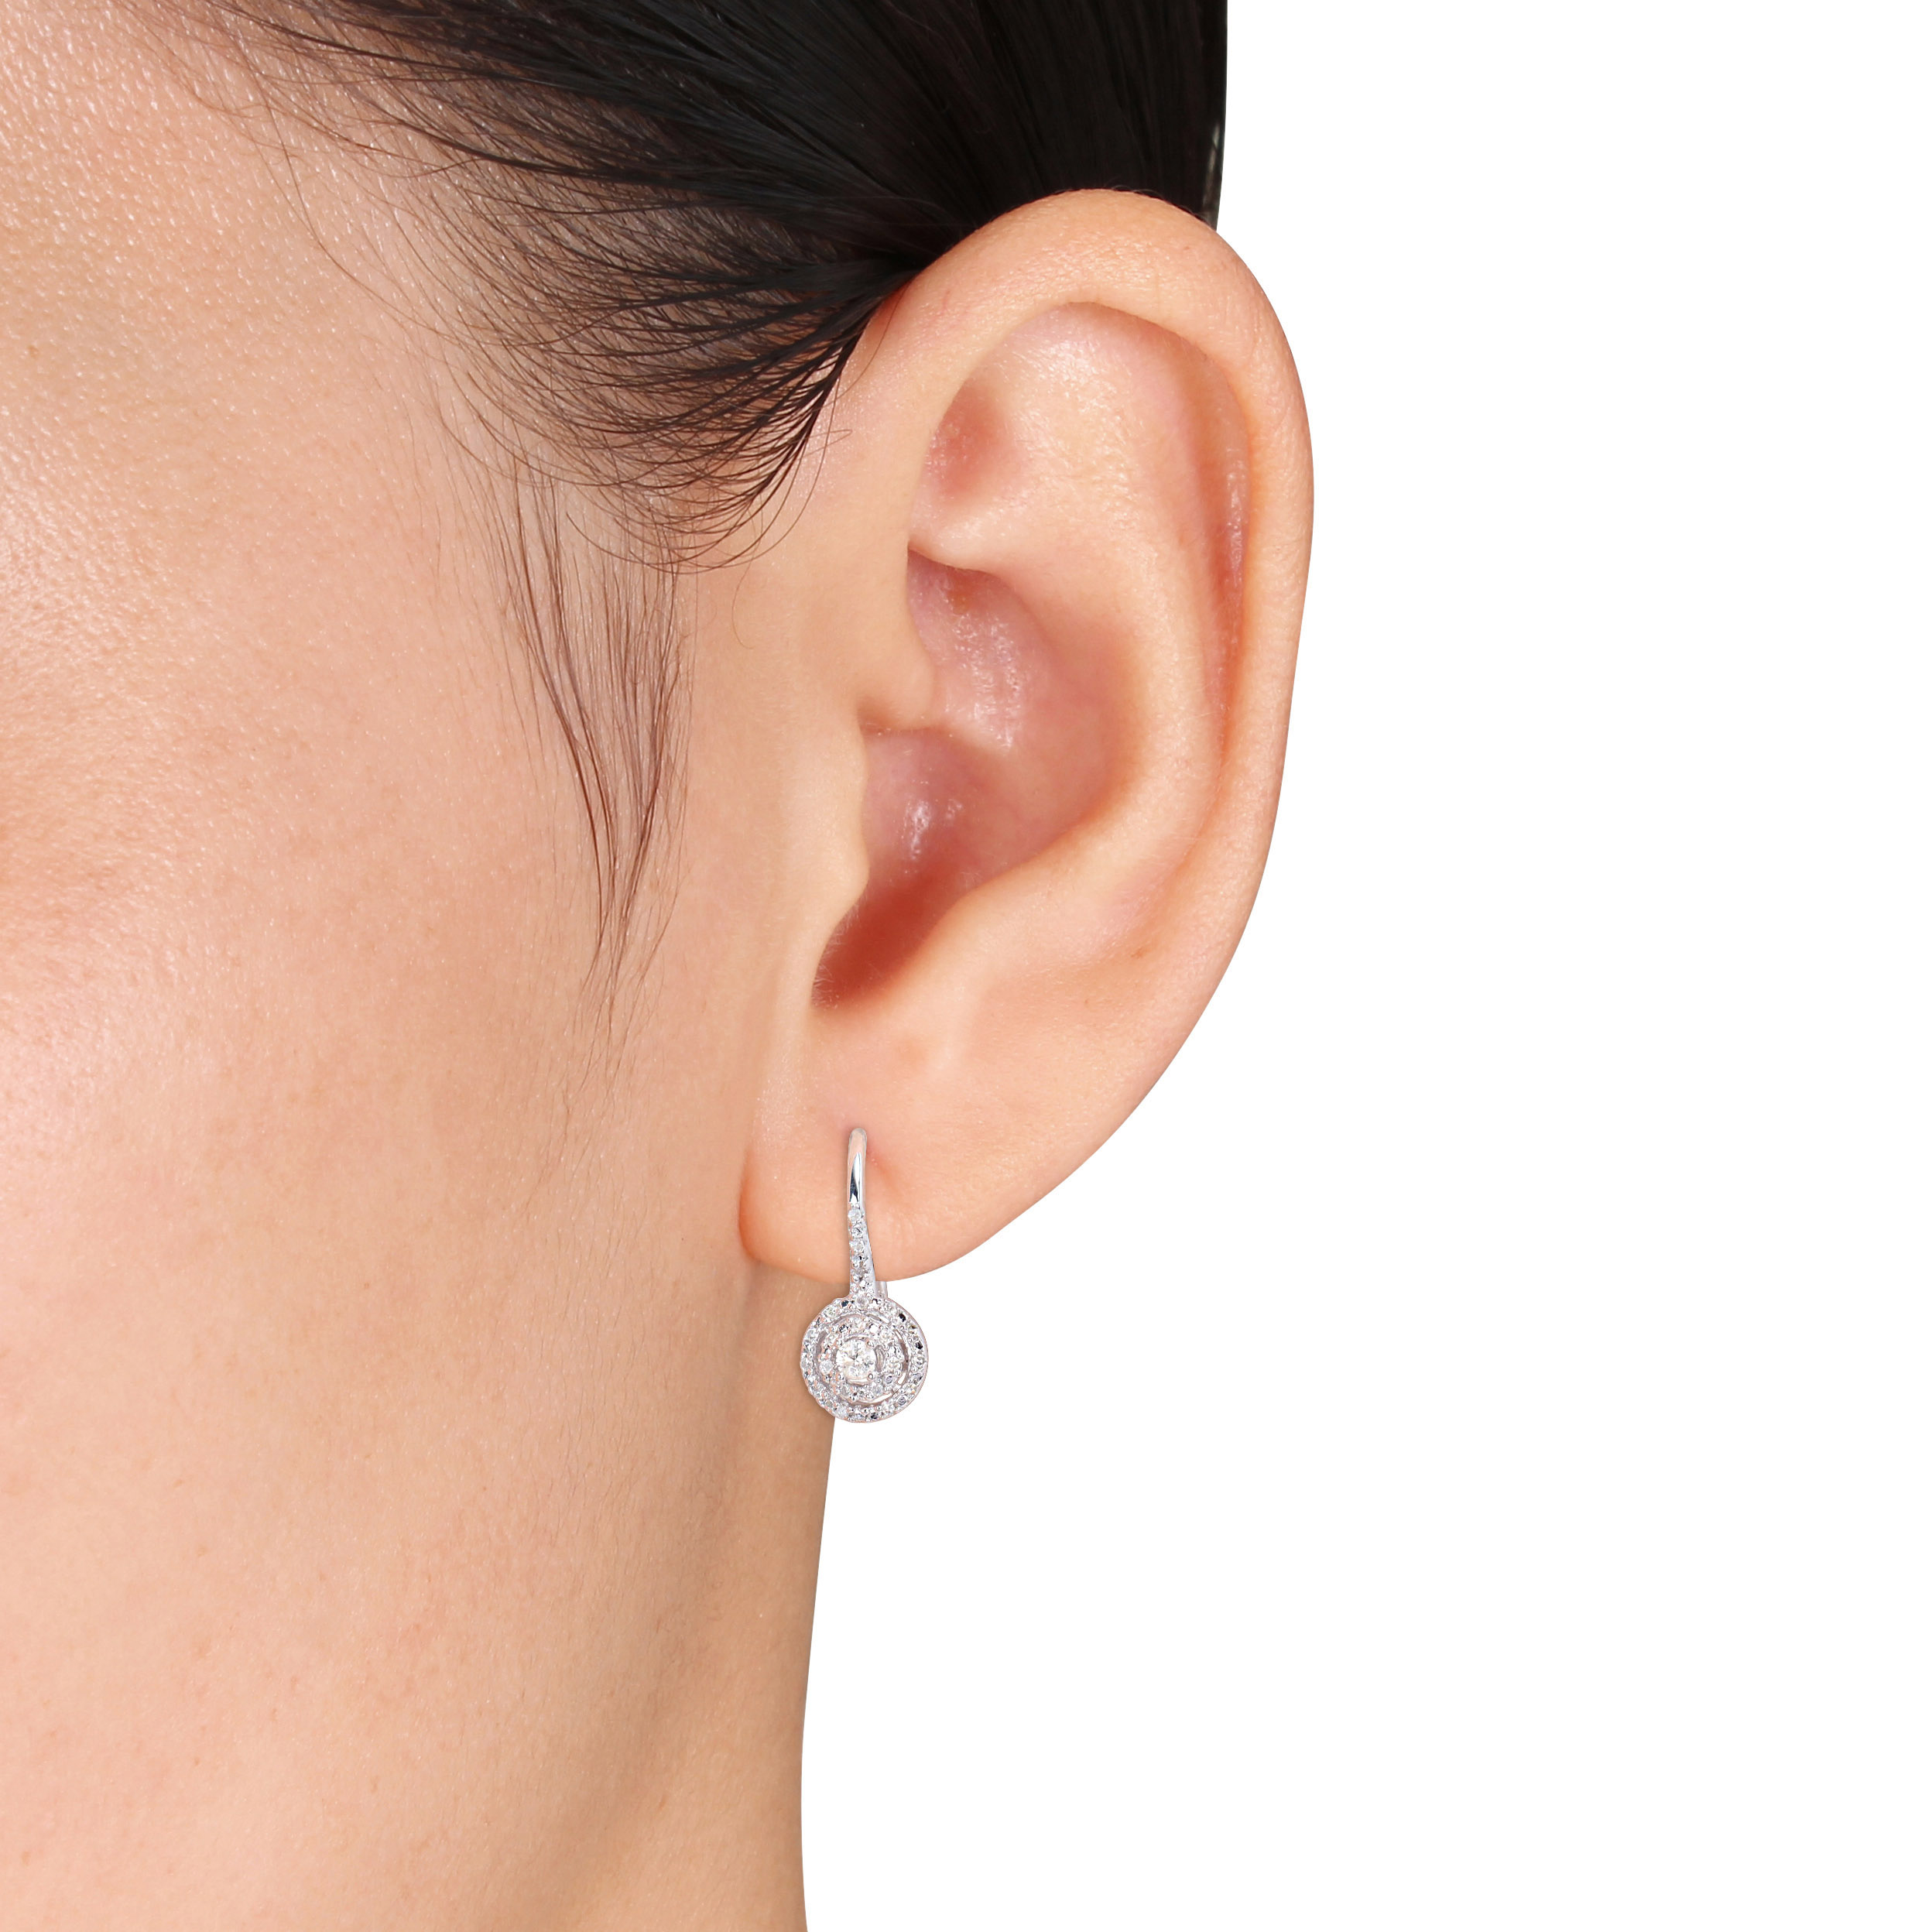 1/4 CT TW Diamond Double Halo Leverback Earrings in Sterling Silver